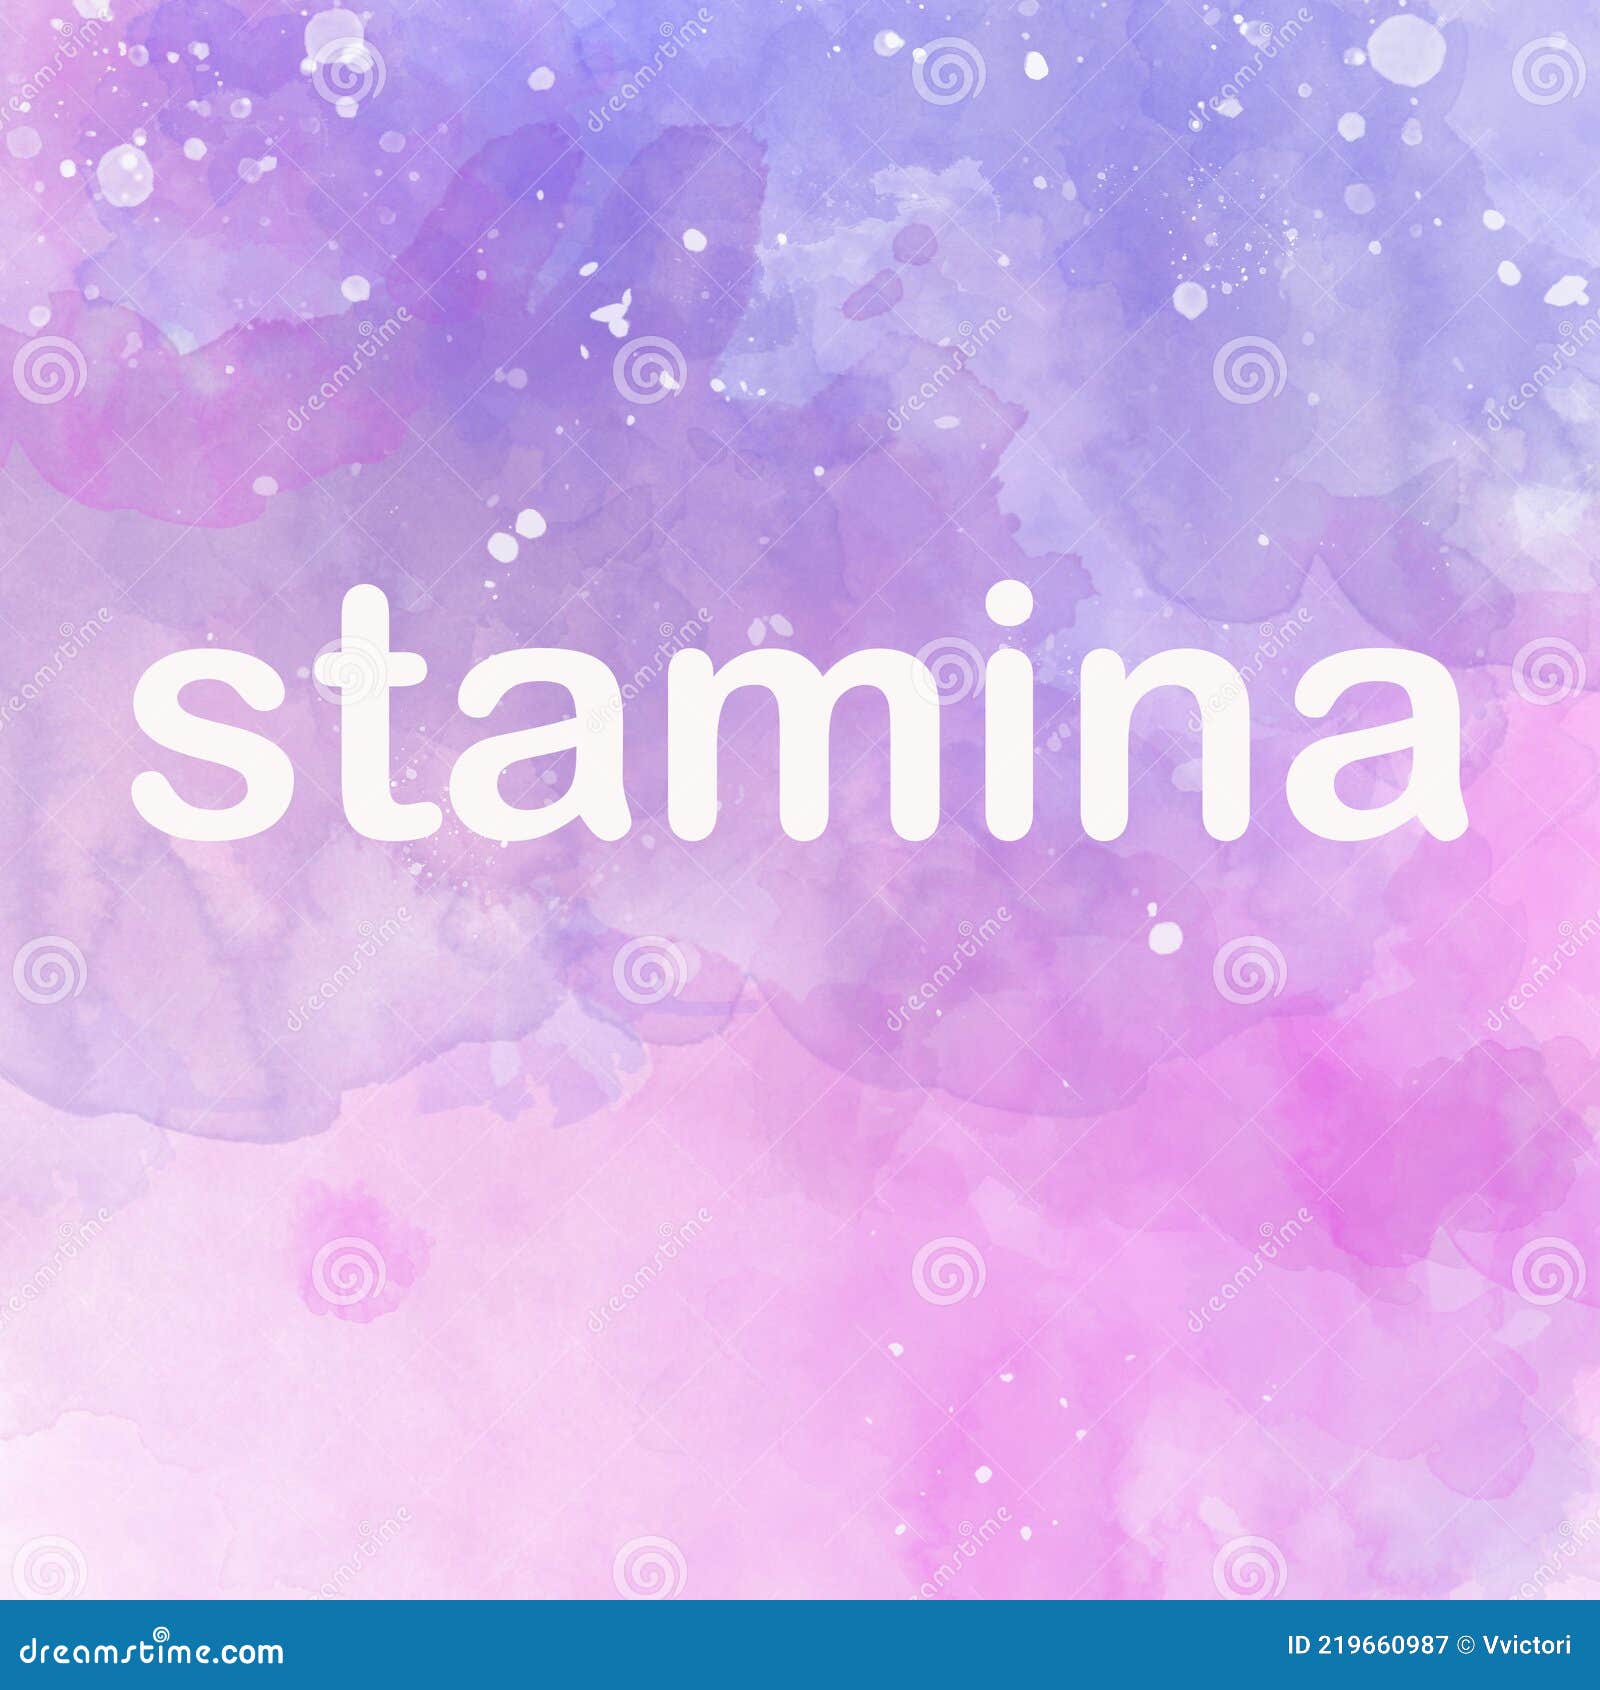 Stamina Photos Download The BEST Free Stamina Stock Photos  HD Images